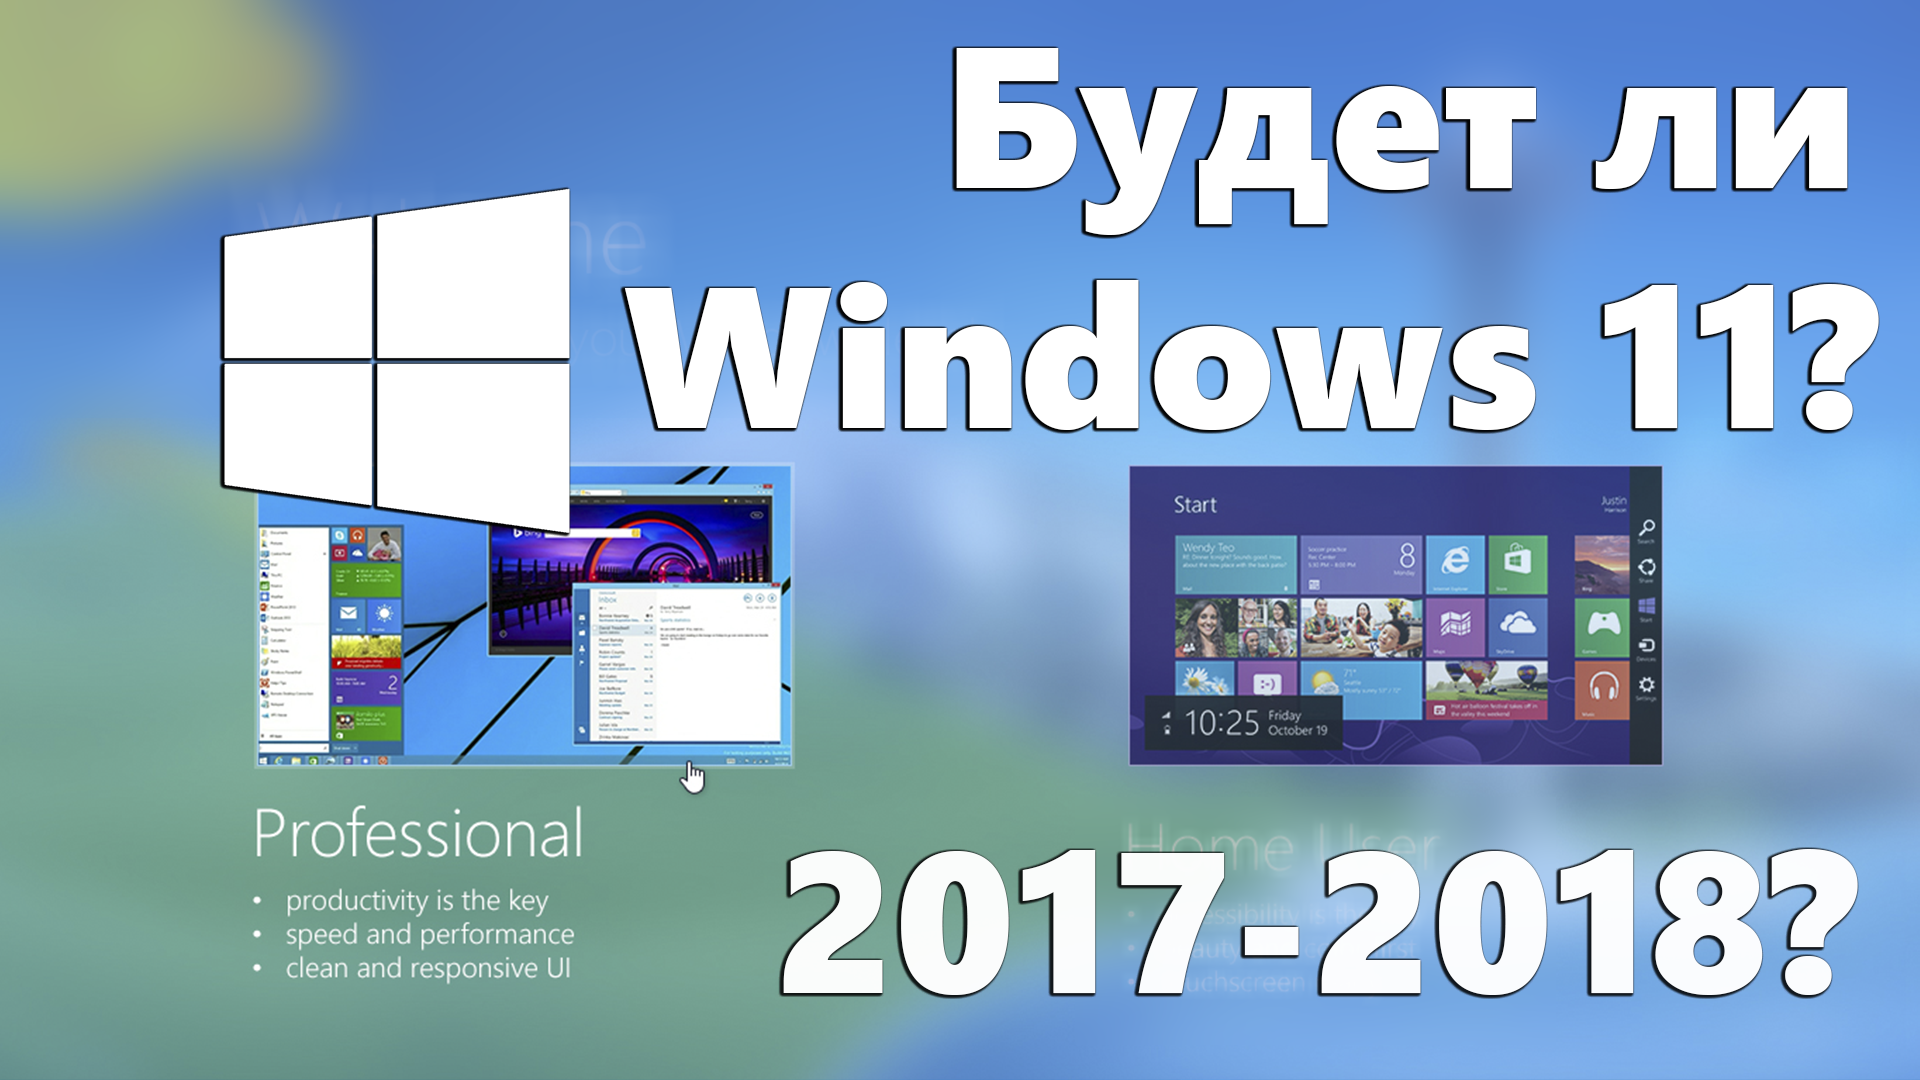 windows 11 microsoft iso download